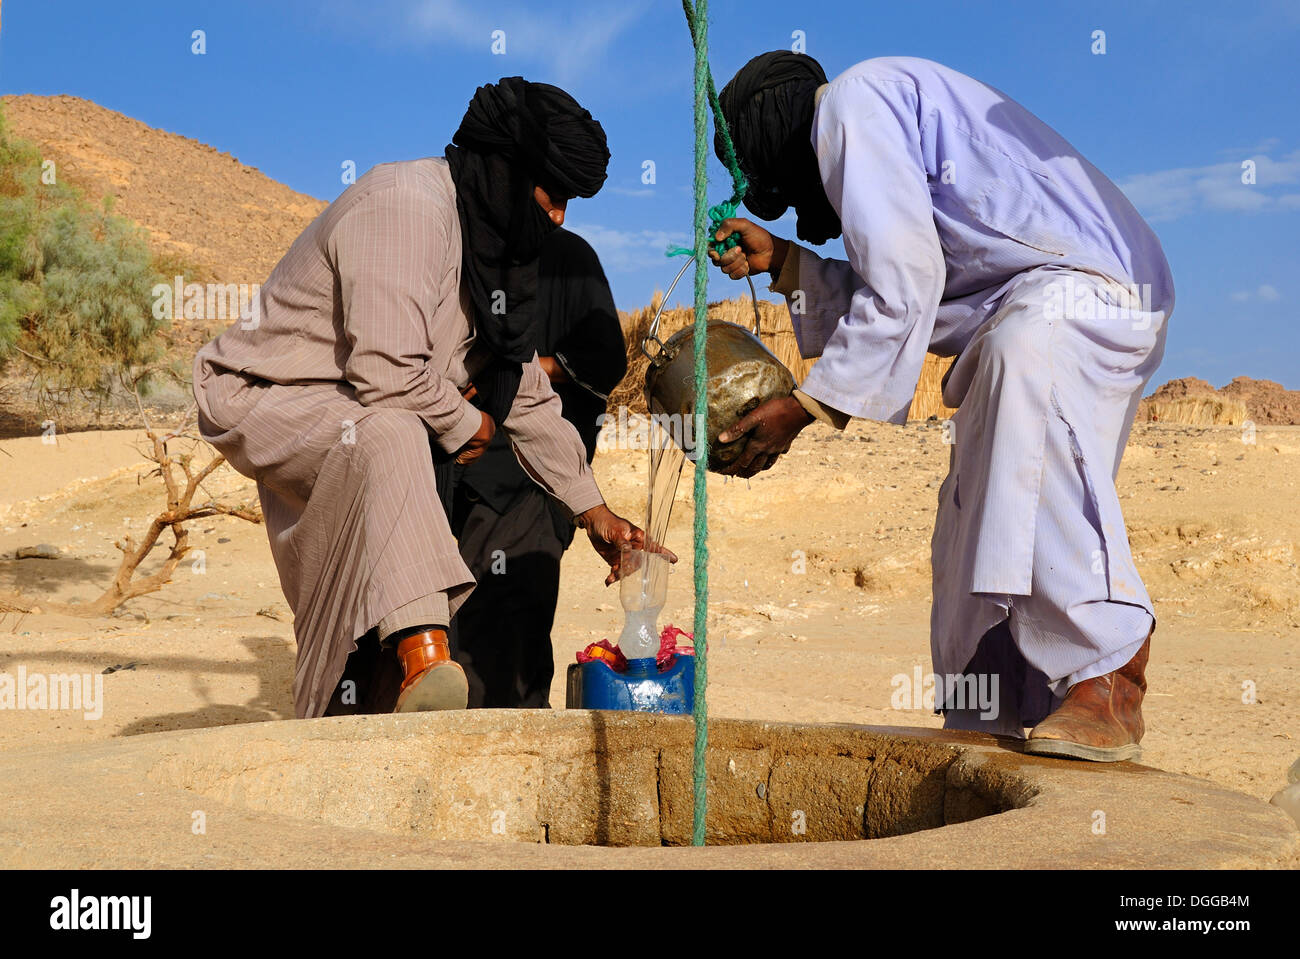 Touareg, Targi la collecte de l'eau à un puits, Hoggar, montagnes de l'Ahaggar, Tamanrasset Wilaya, Algérie, Sahara, Afrique du Nord Banque D'Images